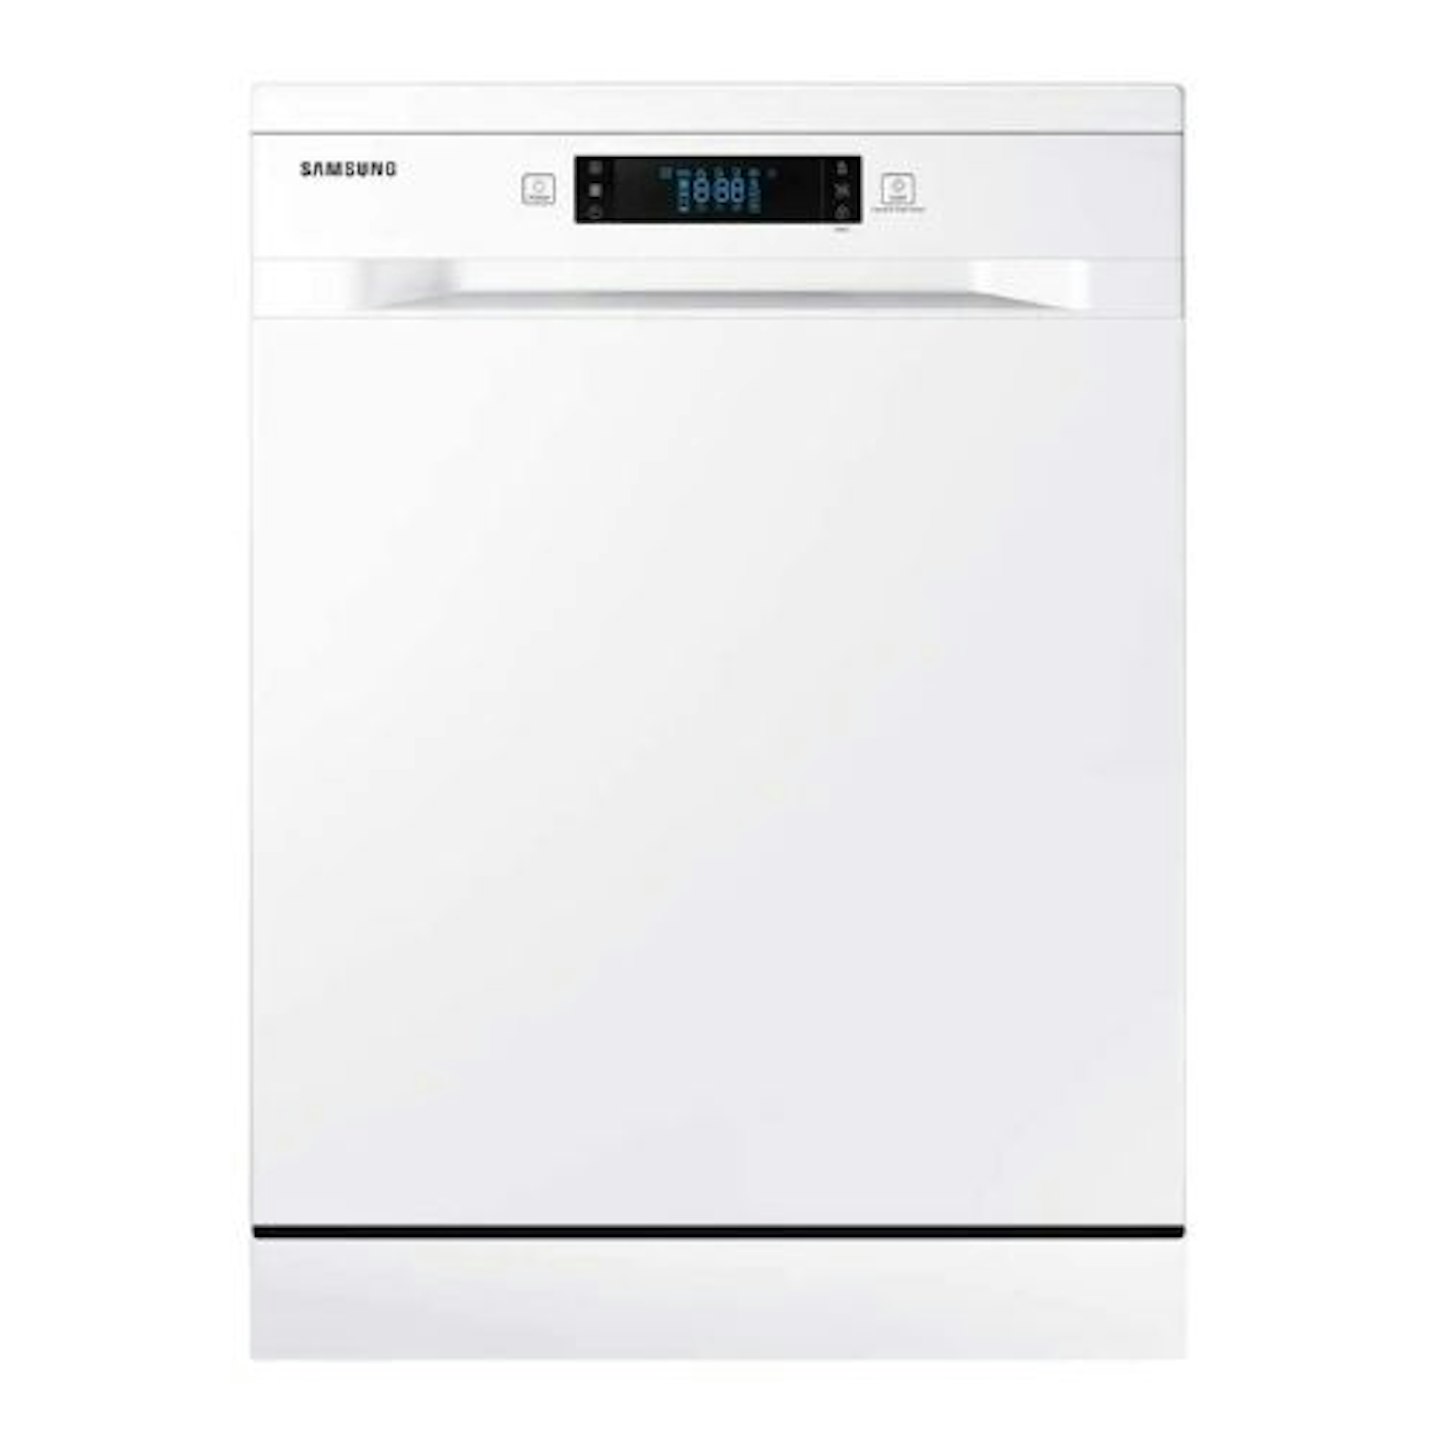 Samsung DW60M6050FW Freestanding Dishwasher – White